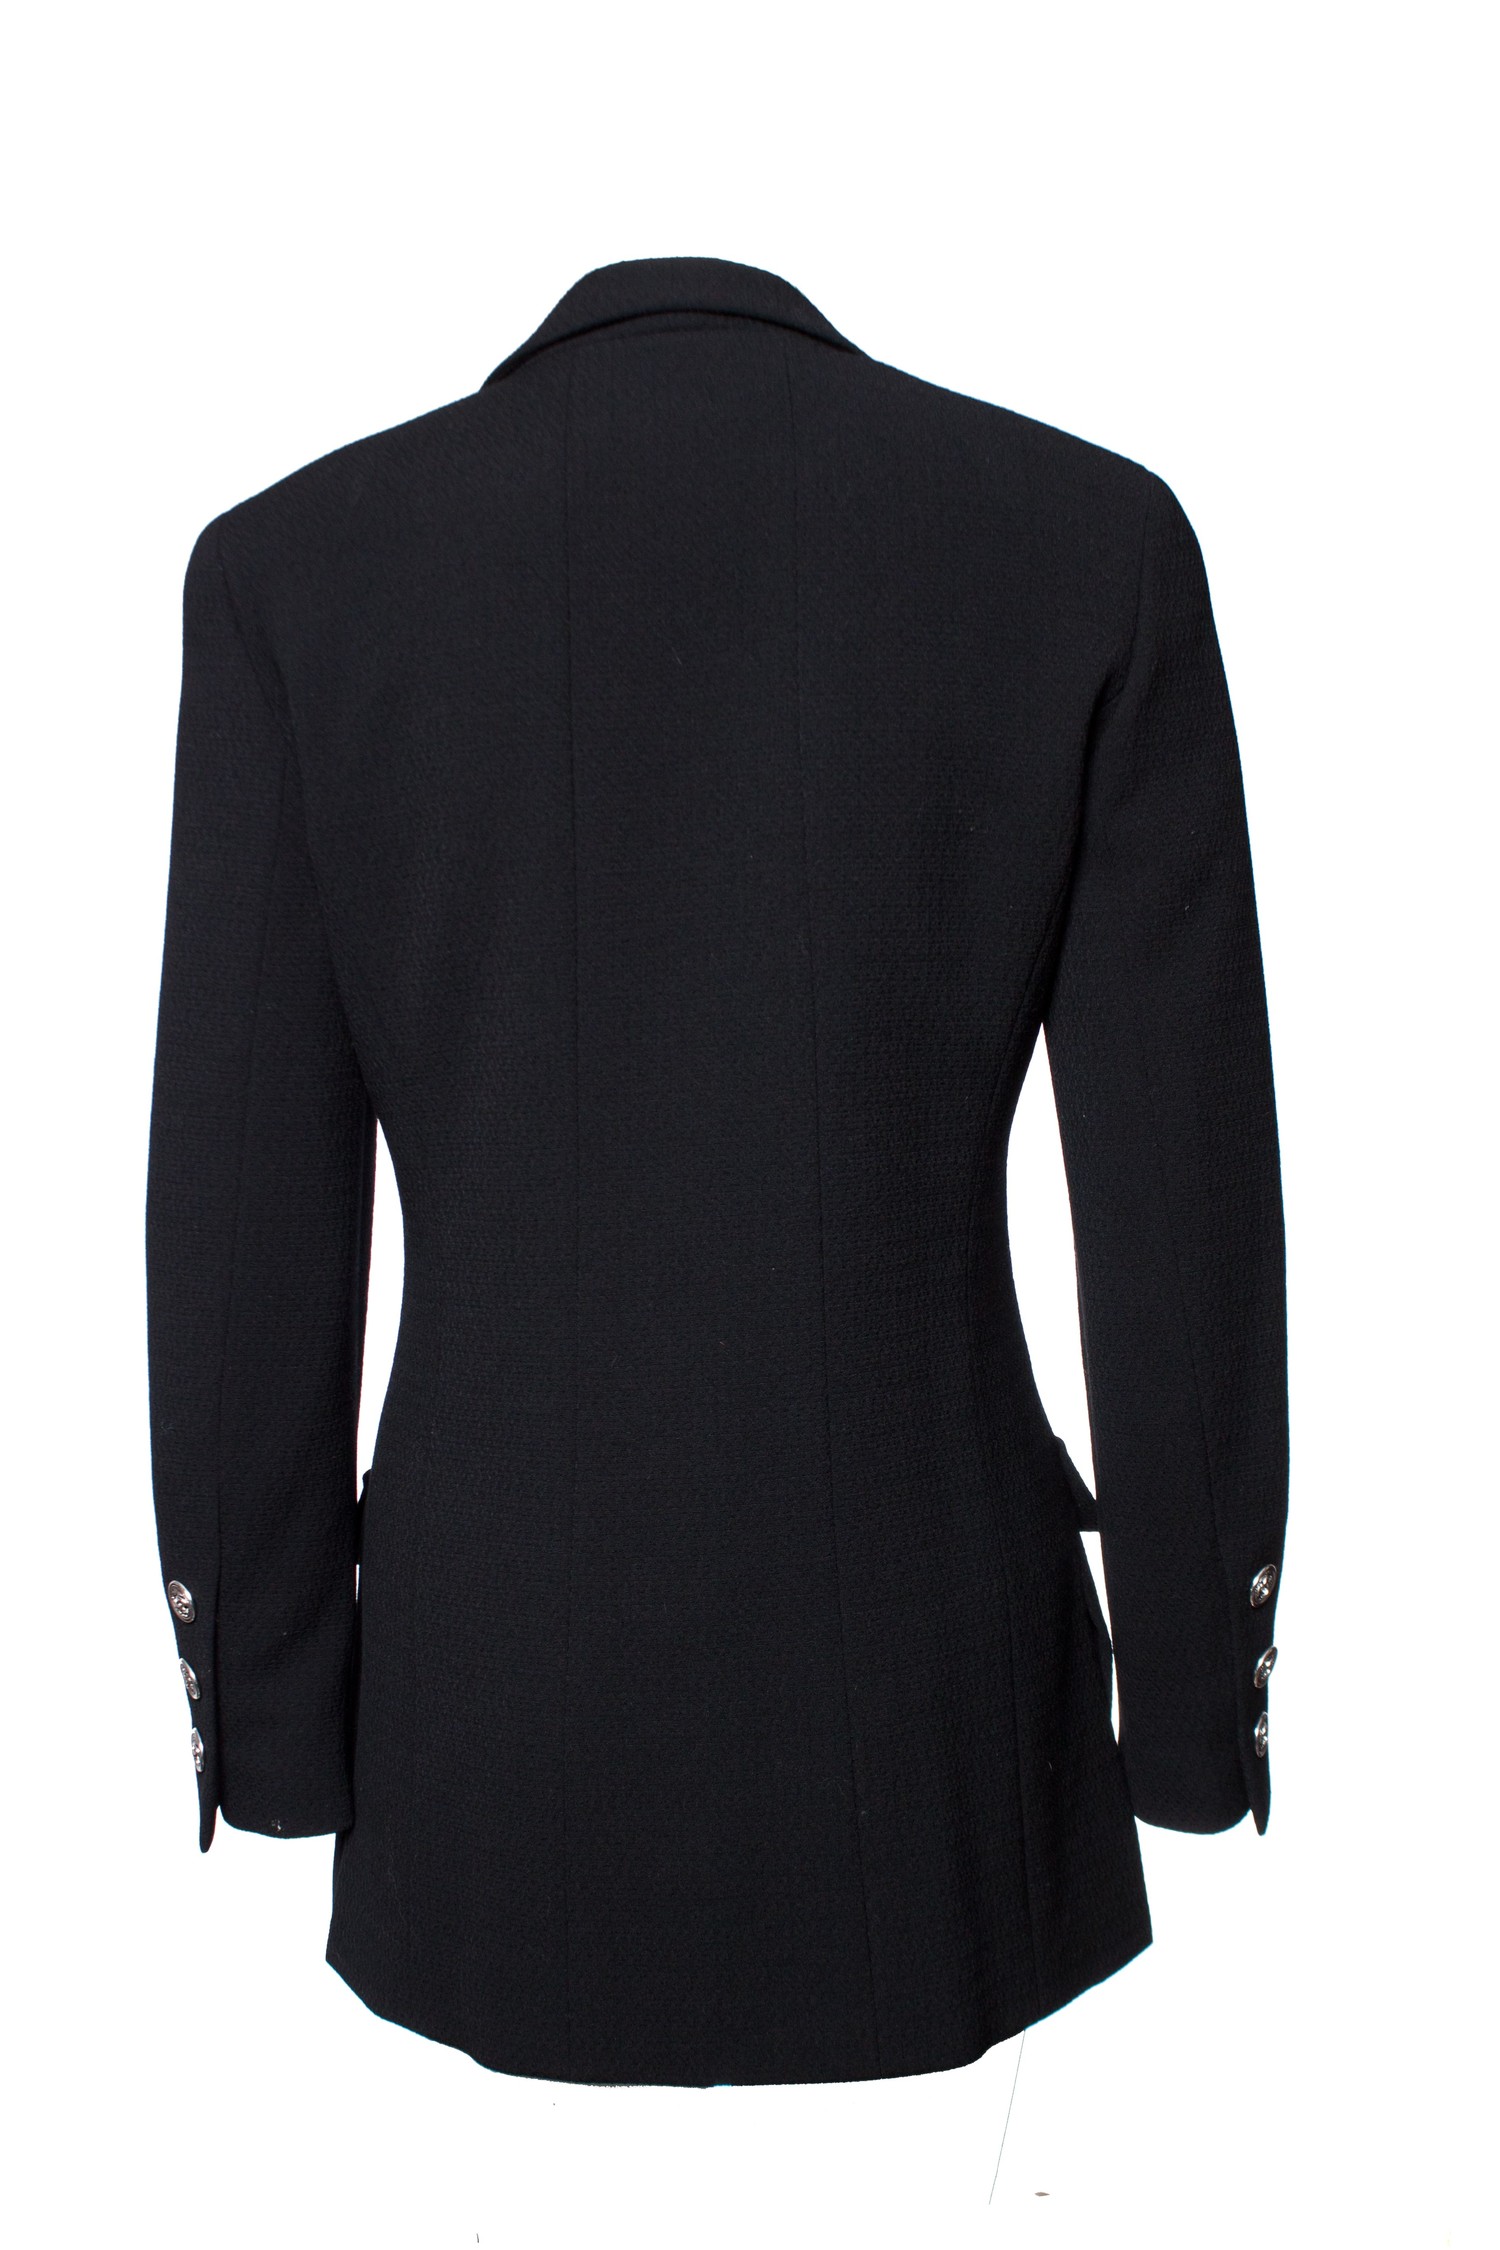 Chanel, Black wool jacket - Unique Designer Pieces